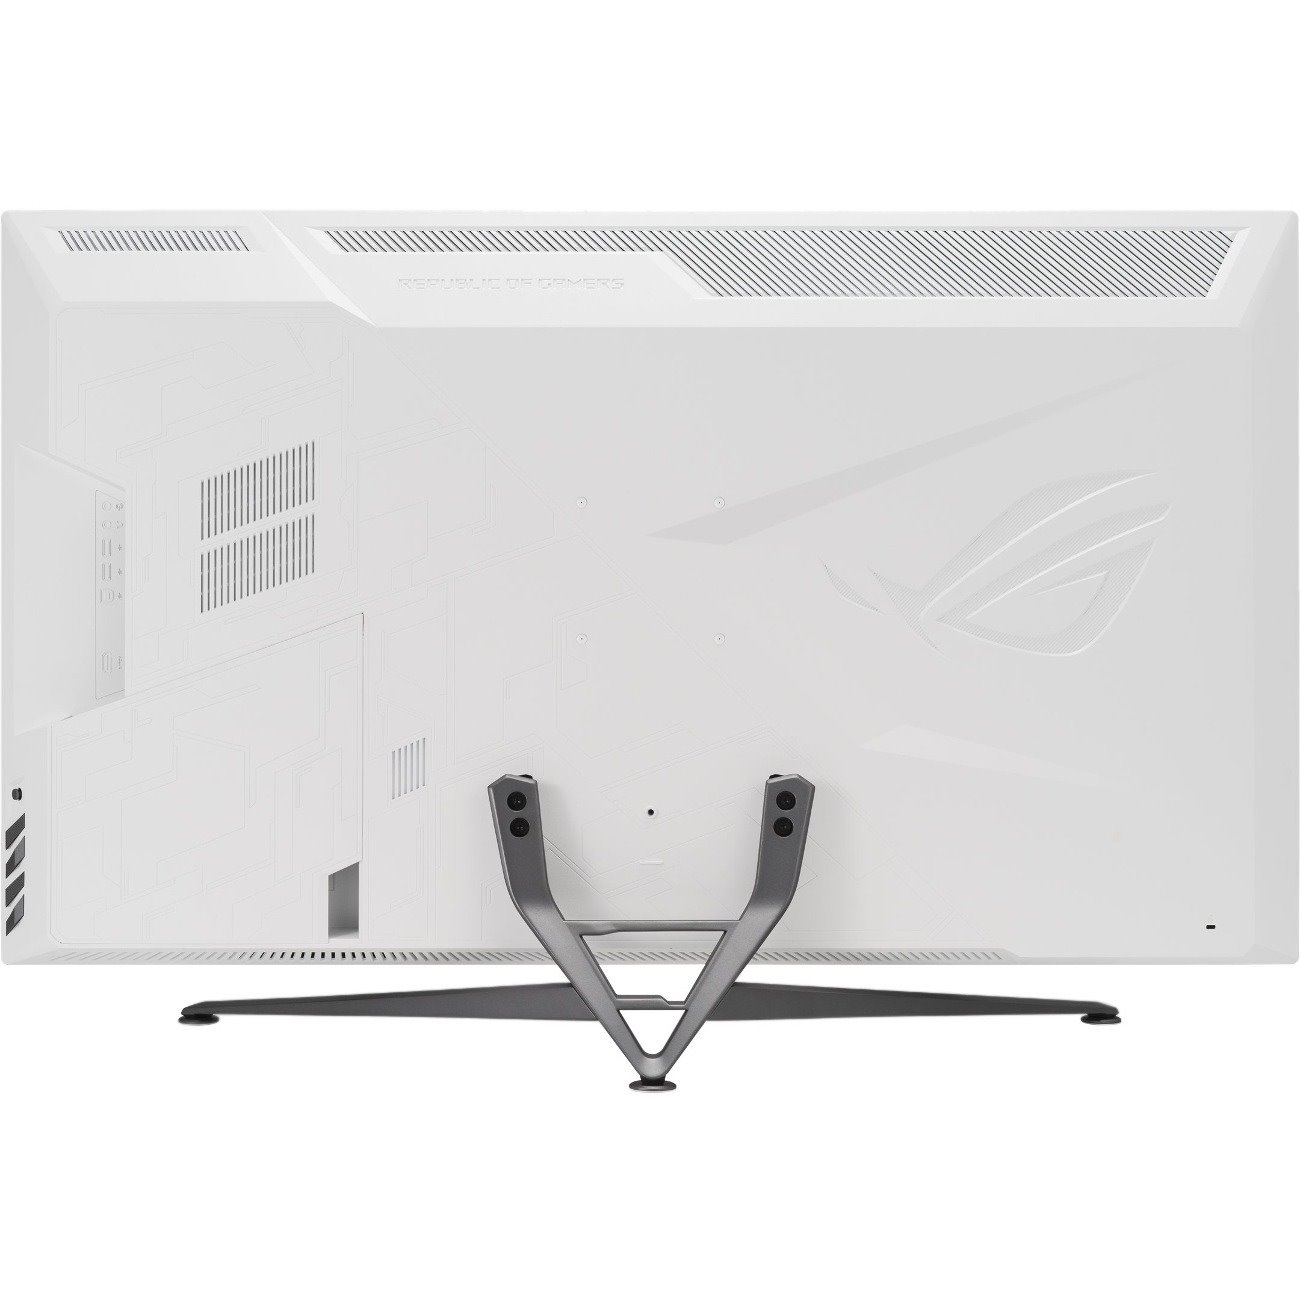 Asus Strix XG43UQ 43" Class 4K UHD Gaming LCD Monitor - 16:9 - Black, White